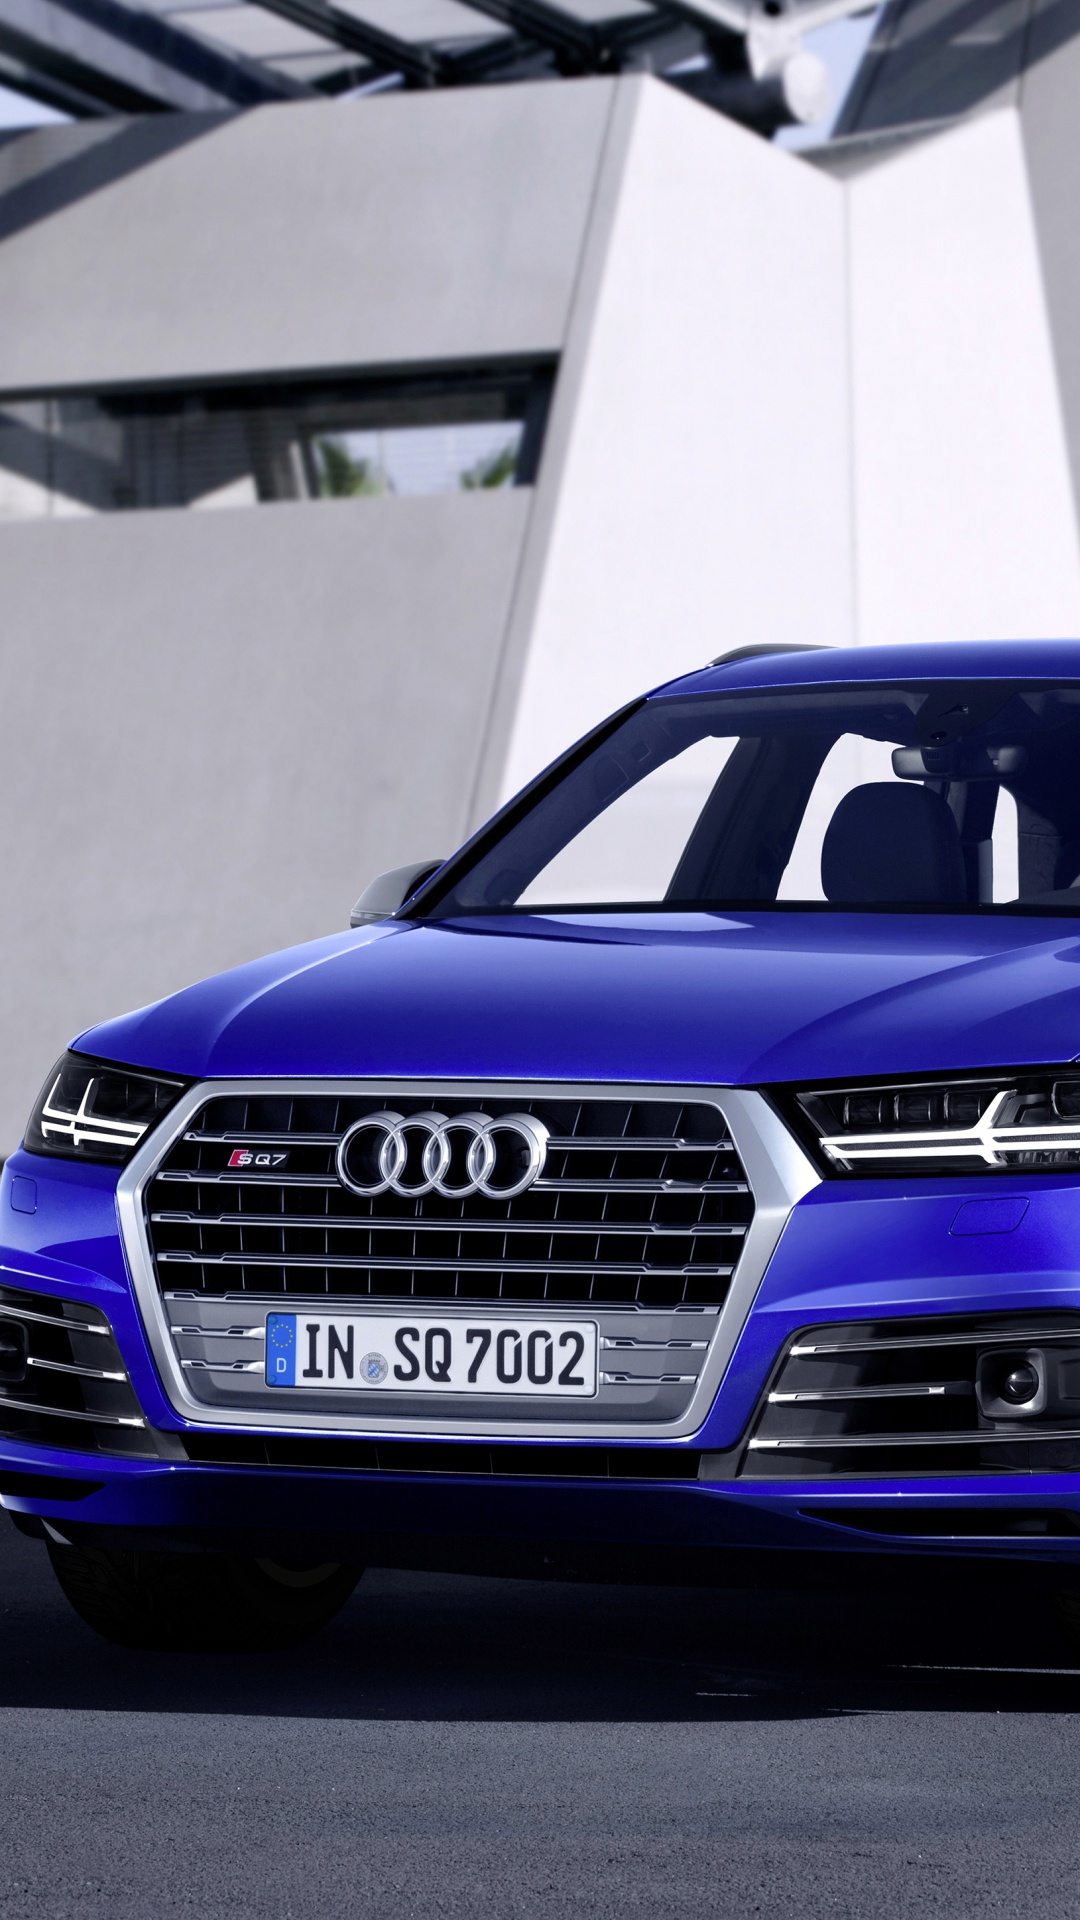 Grayscale Photo of Audi a 4 Sedan. Wallpaper in 1080x1920 Resolution